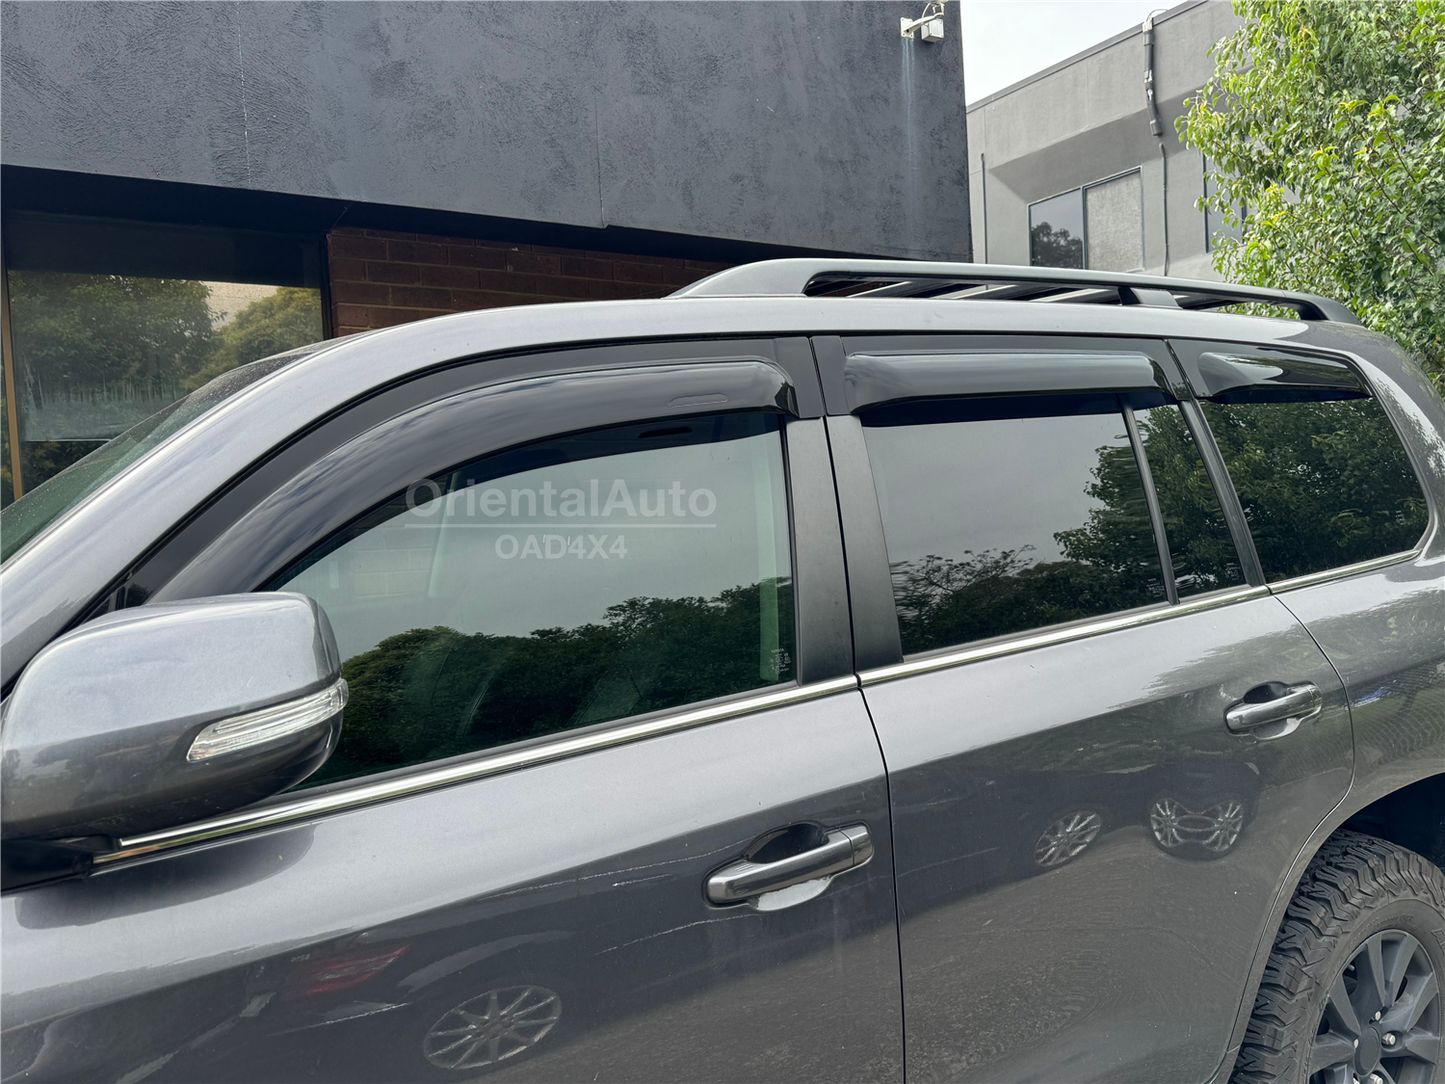 Injection Bonnet Protector & Widened Luxury 6pcs Weathershields For Toyota LandCruiser Land Cruiser 200 LC200 2016-2021 Window Visor Weather Shields + Hood Protector Bonnet Guard